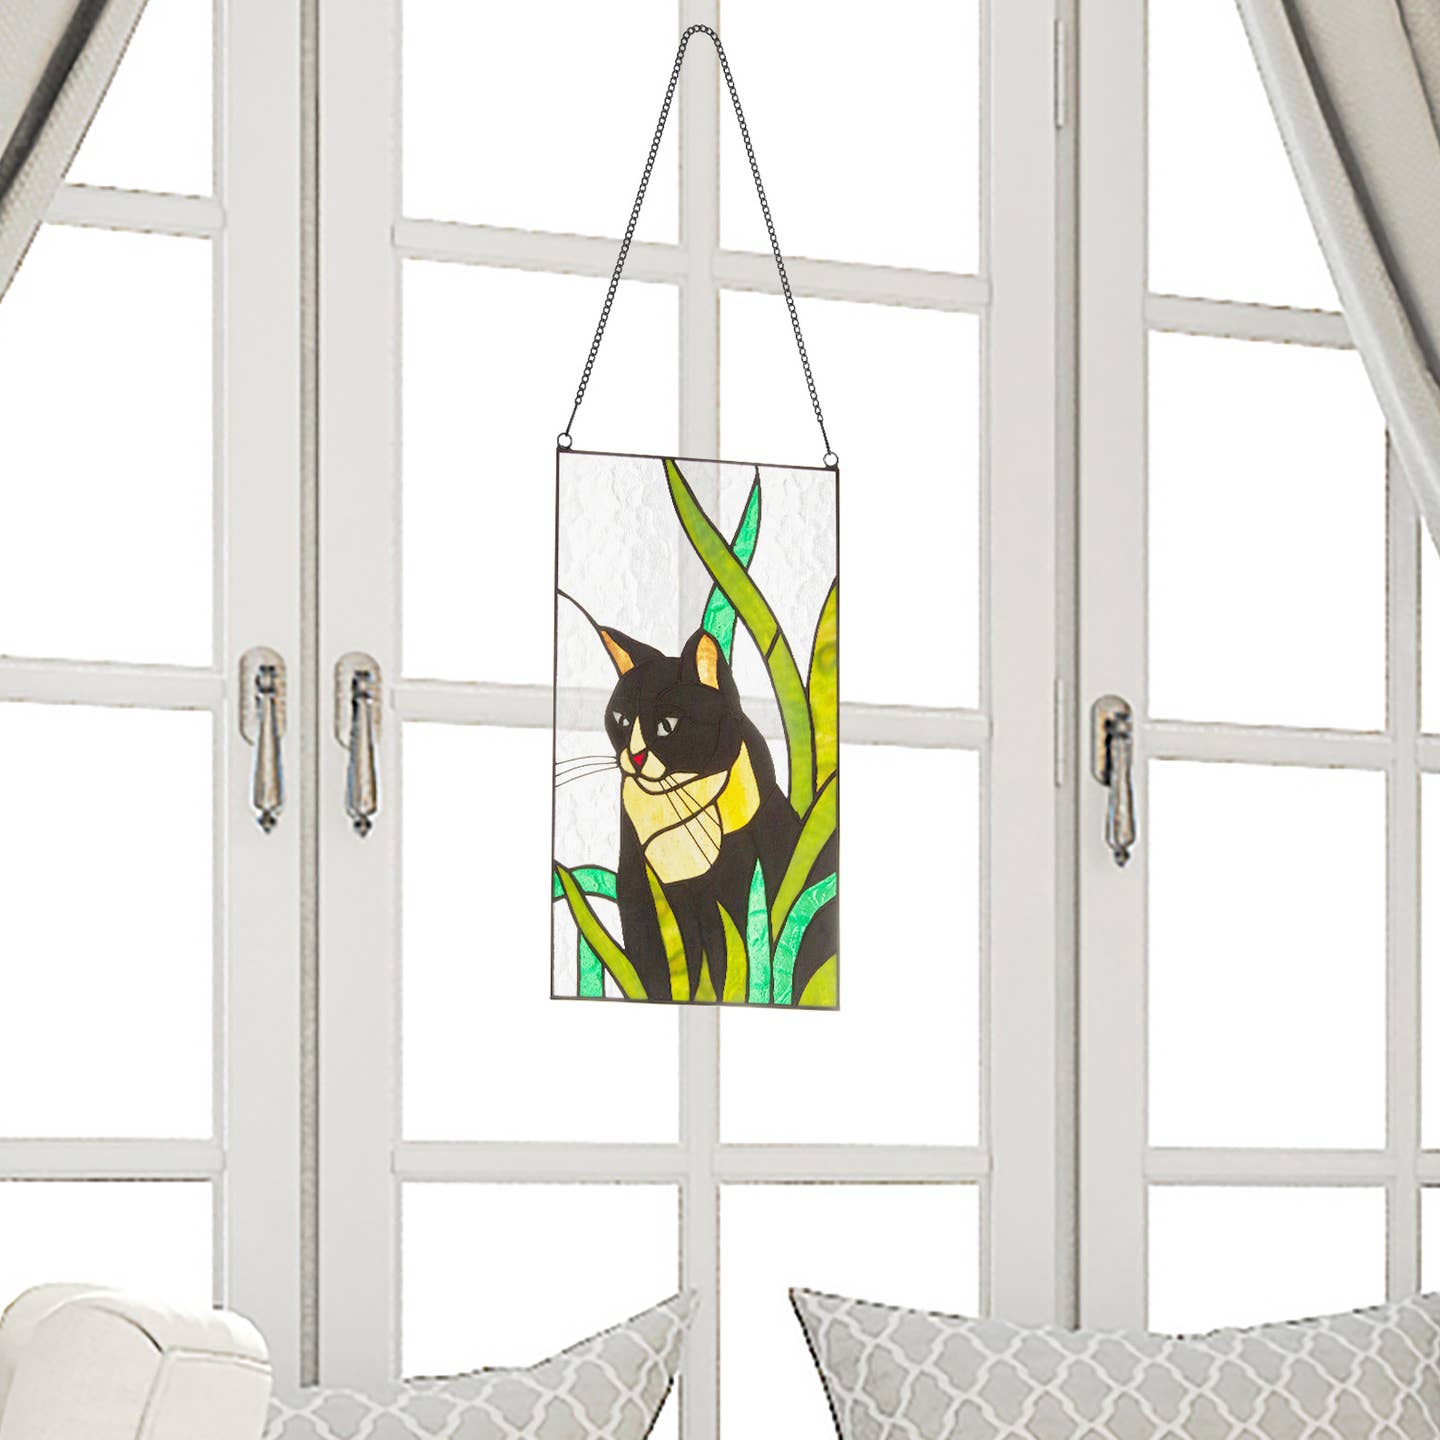 Dixon Tuxedo Cat Stained Glass Window Panel